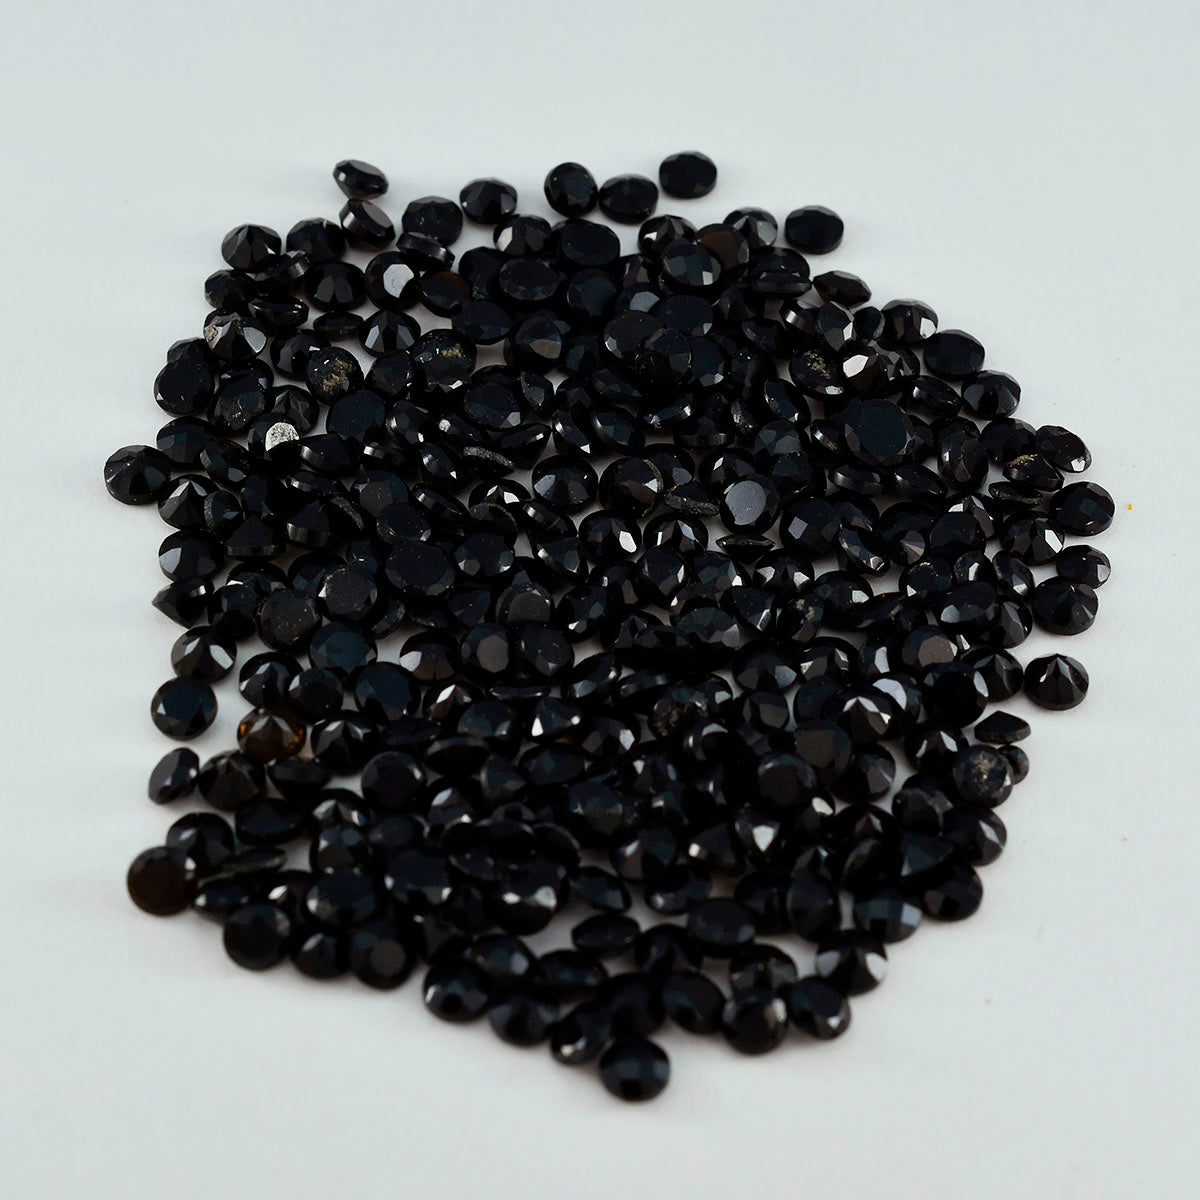 Riyogems 1PC Genuine Black Onyx Faceted 3x3 mm Round Shape Nice Quality Loose Stone